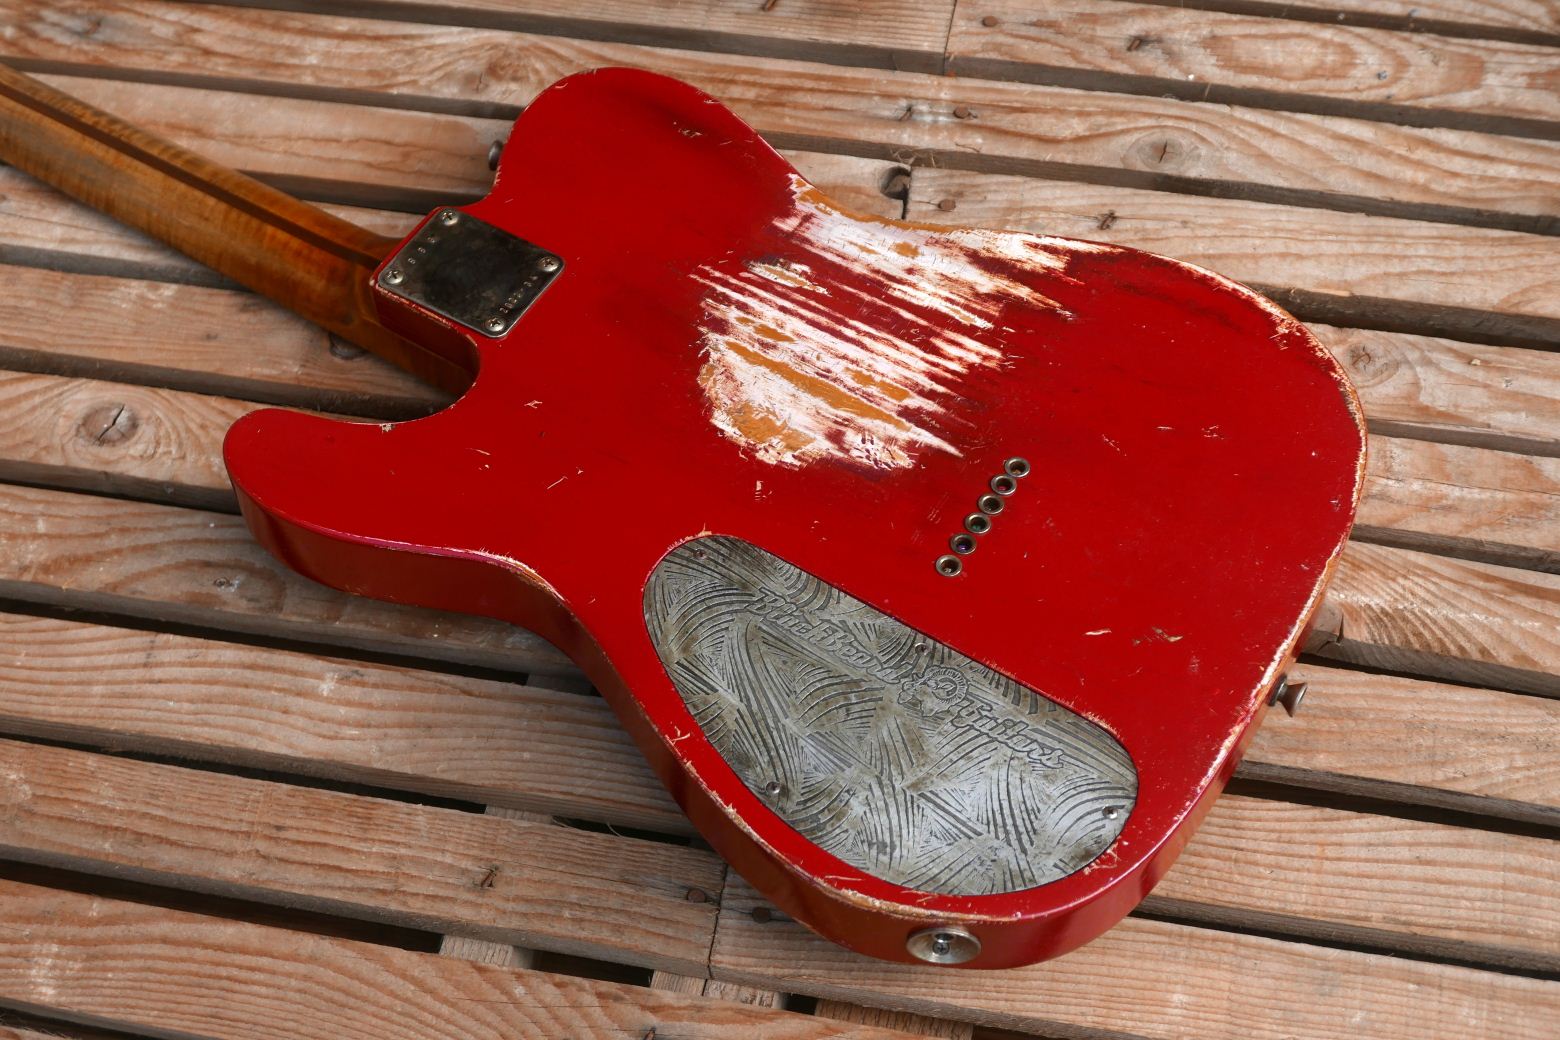 red telecaster guitar body back